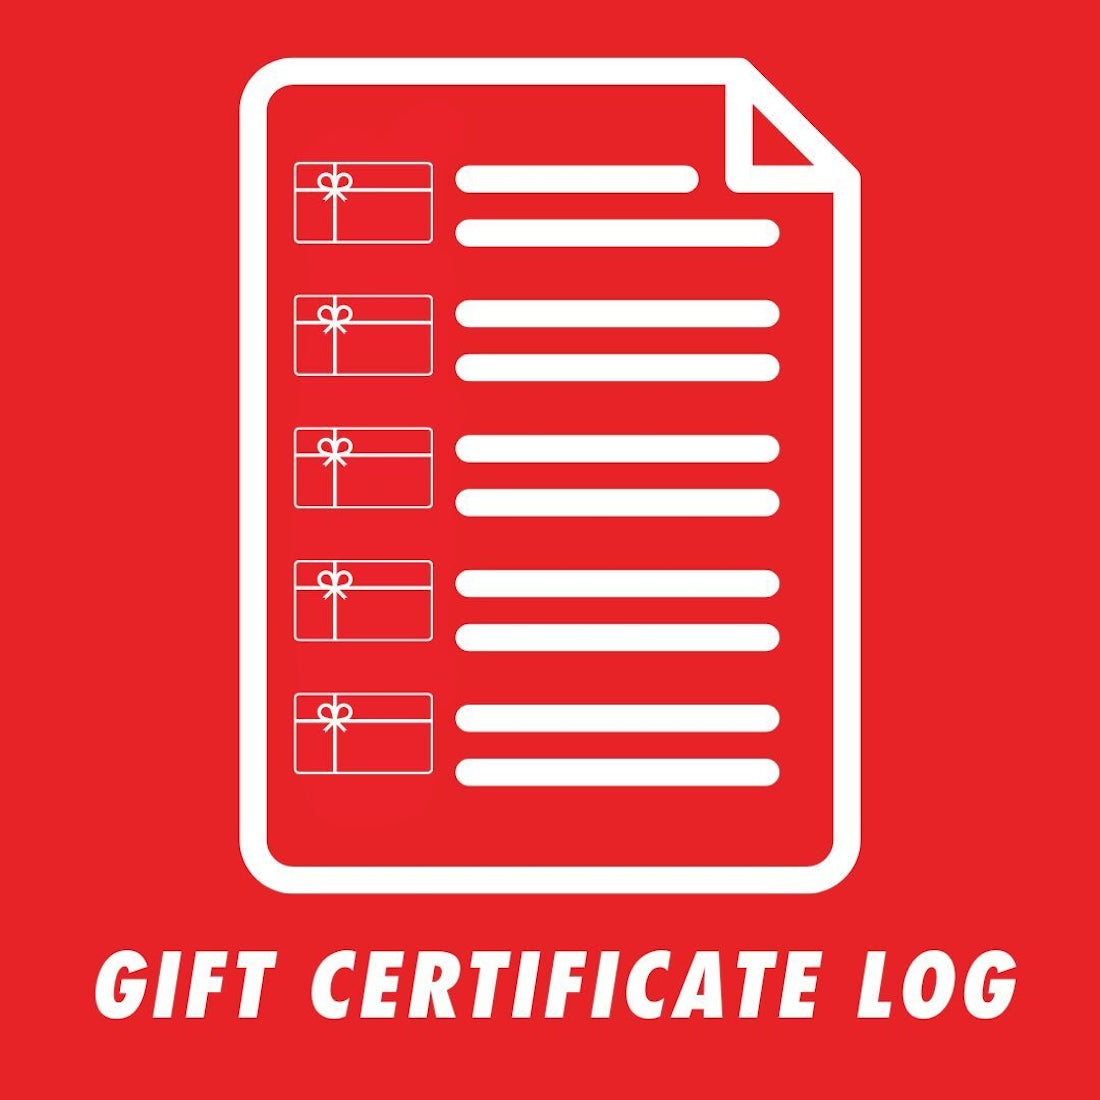 Gift Certificate Log Download Main View